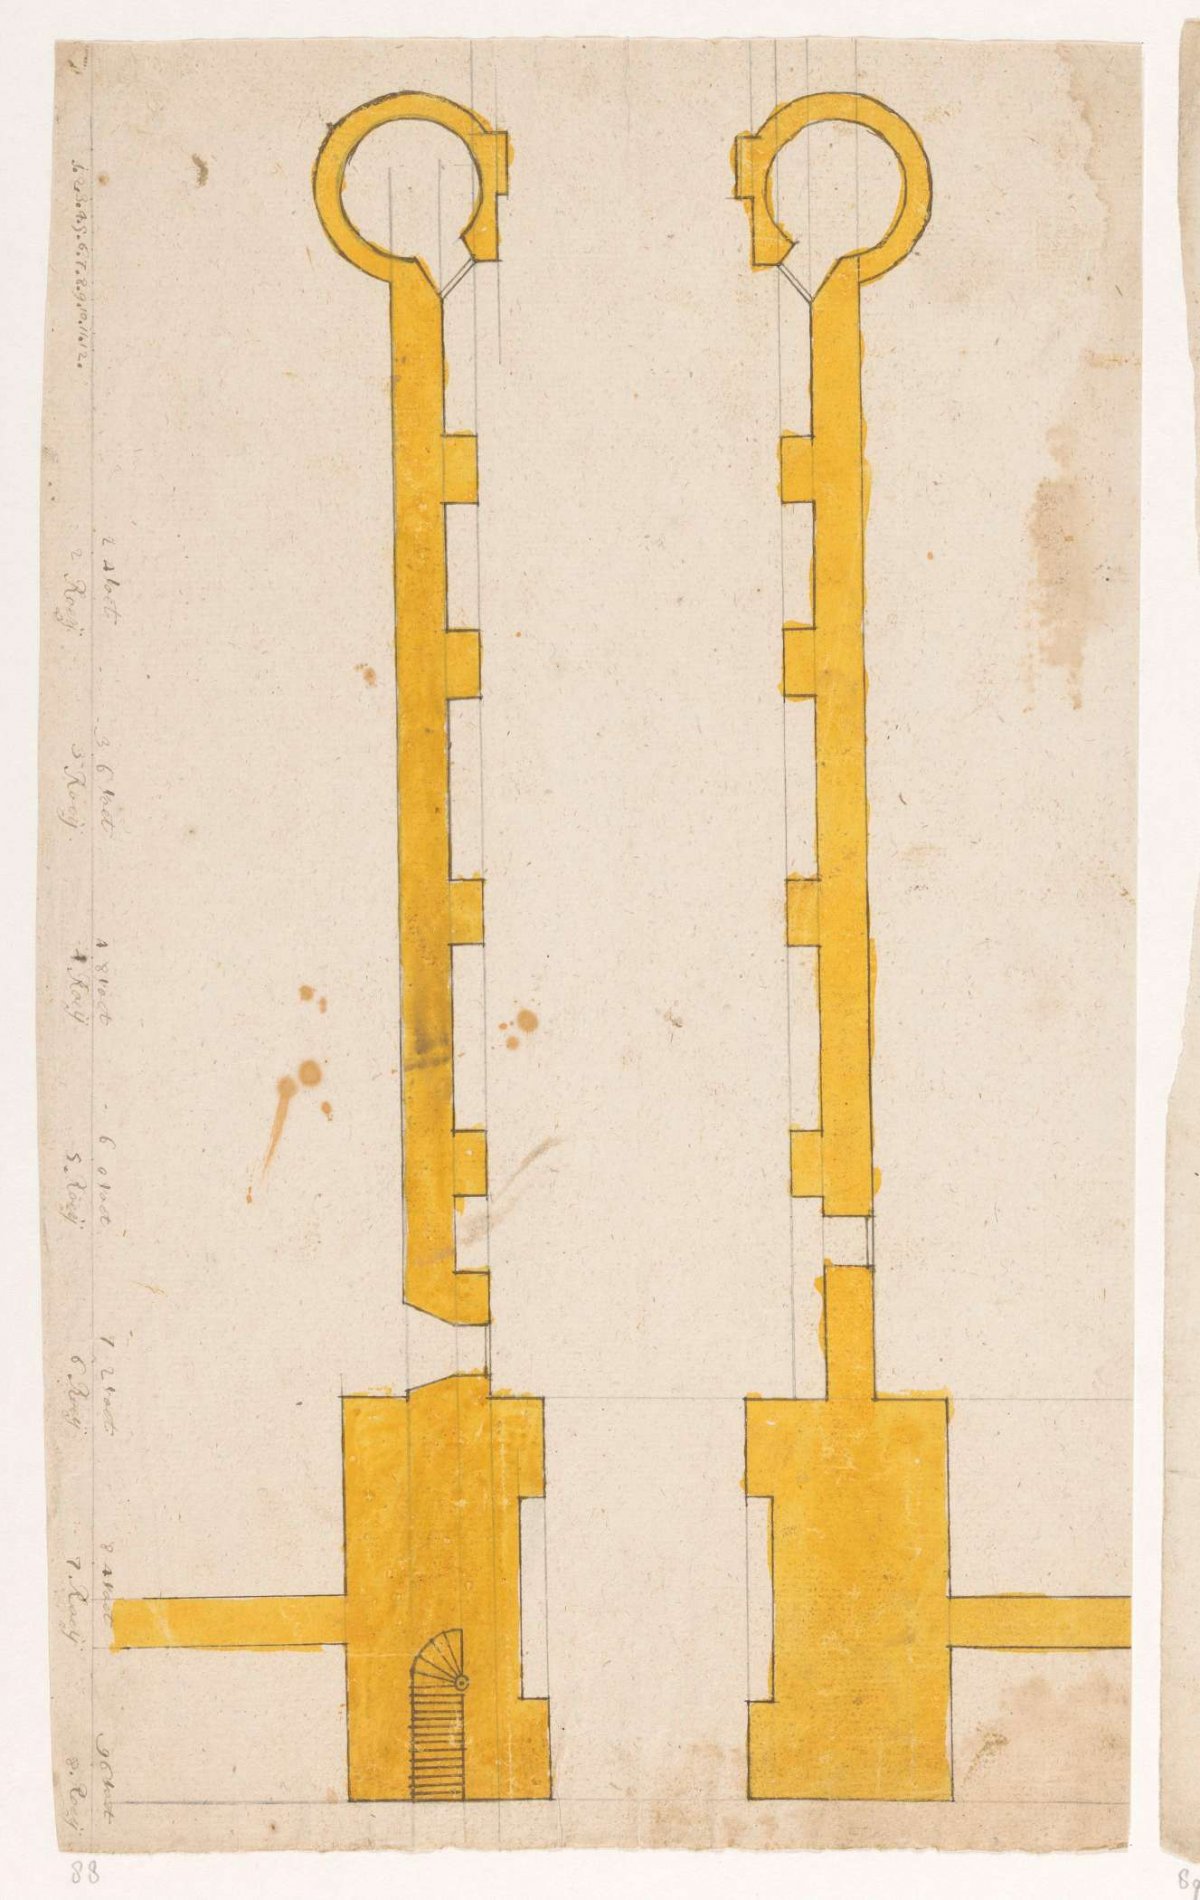 Plan of gate or gatehouse, Jan Brandes, 1770 - 1808